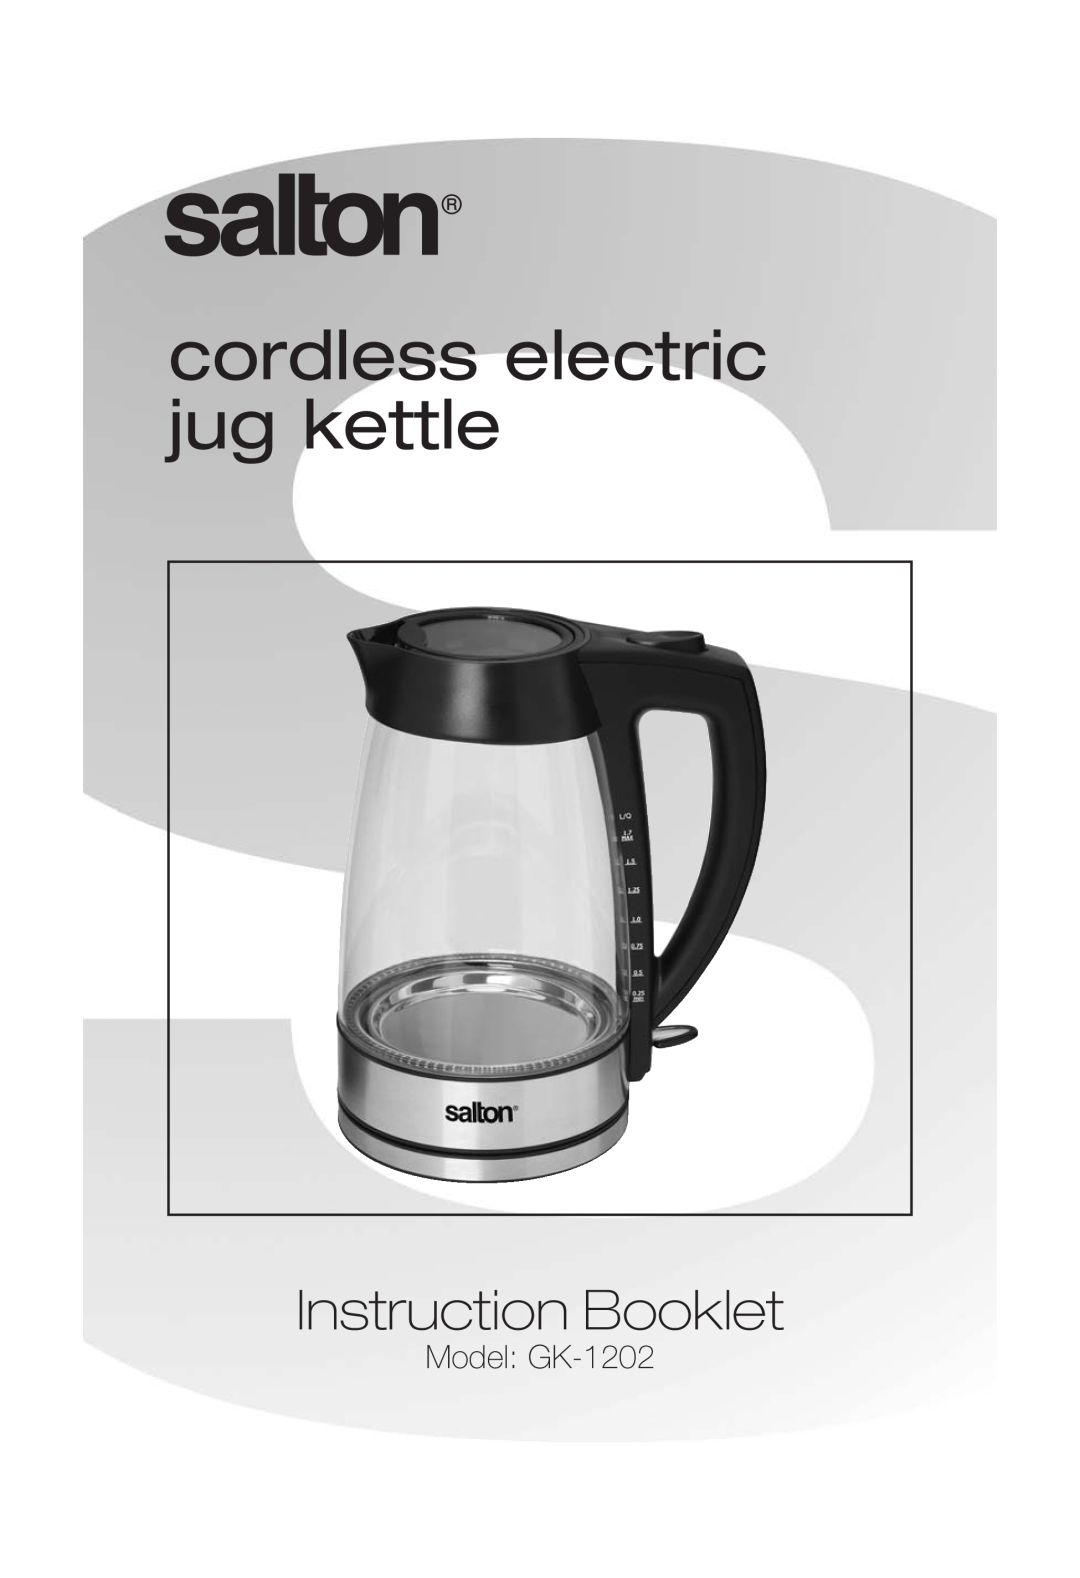 Salton manual Model GK-1202, cordless electric jug kettle, Instruction Booklet 